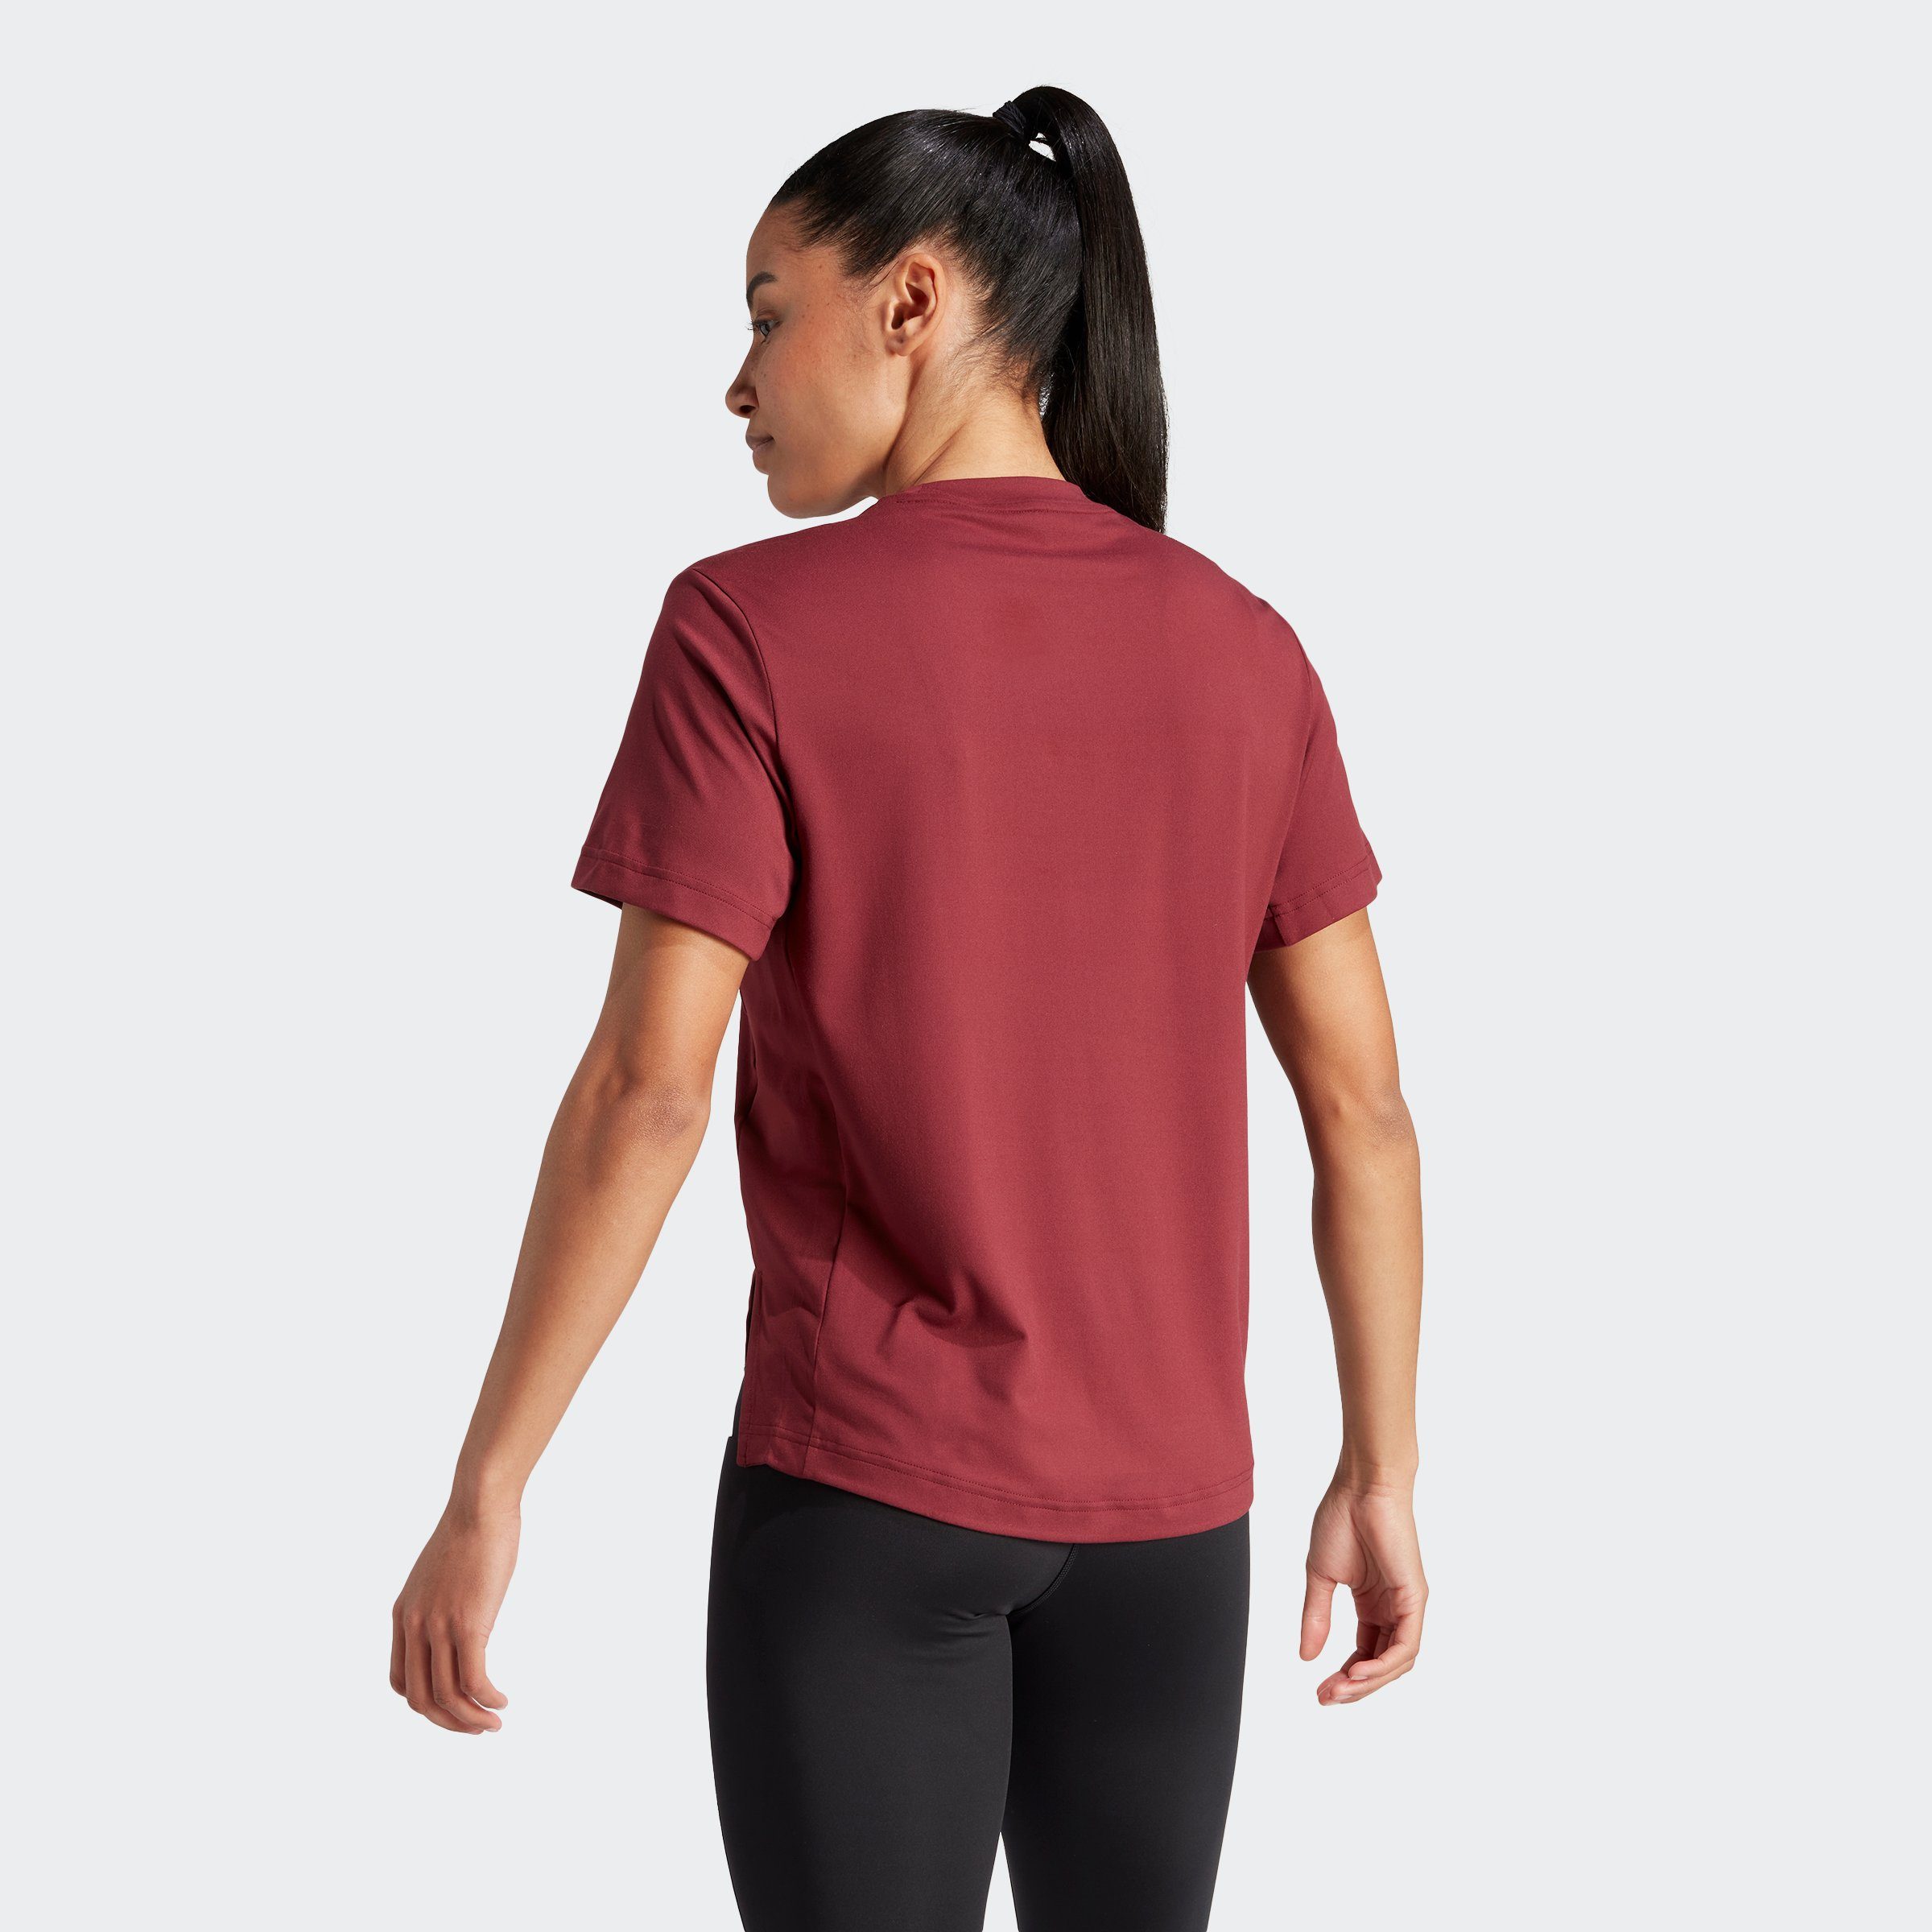 T-Shirt Shadow Performance White Red adidas / VERSATILE